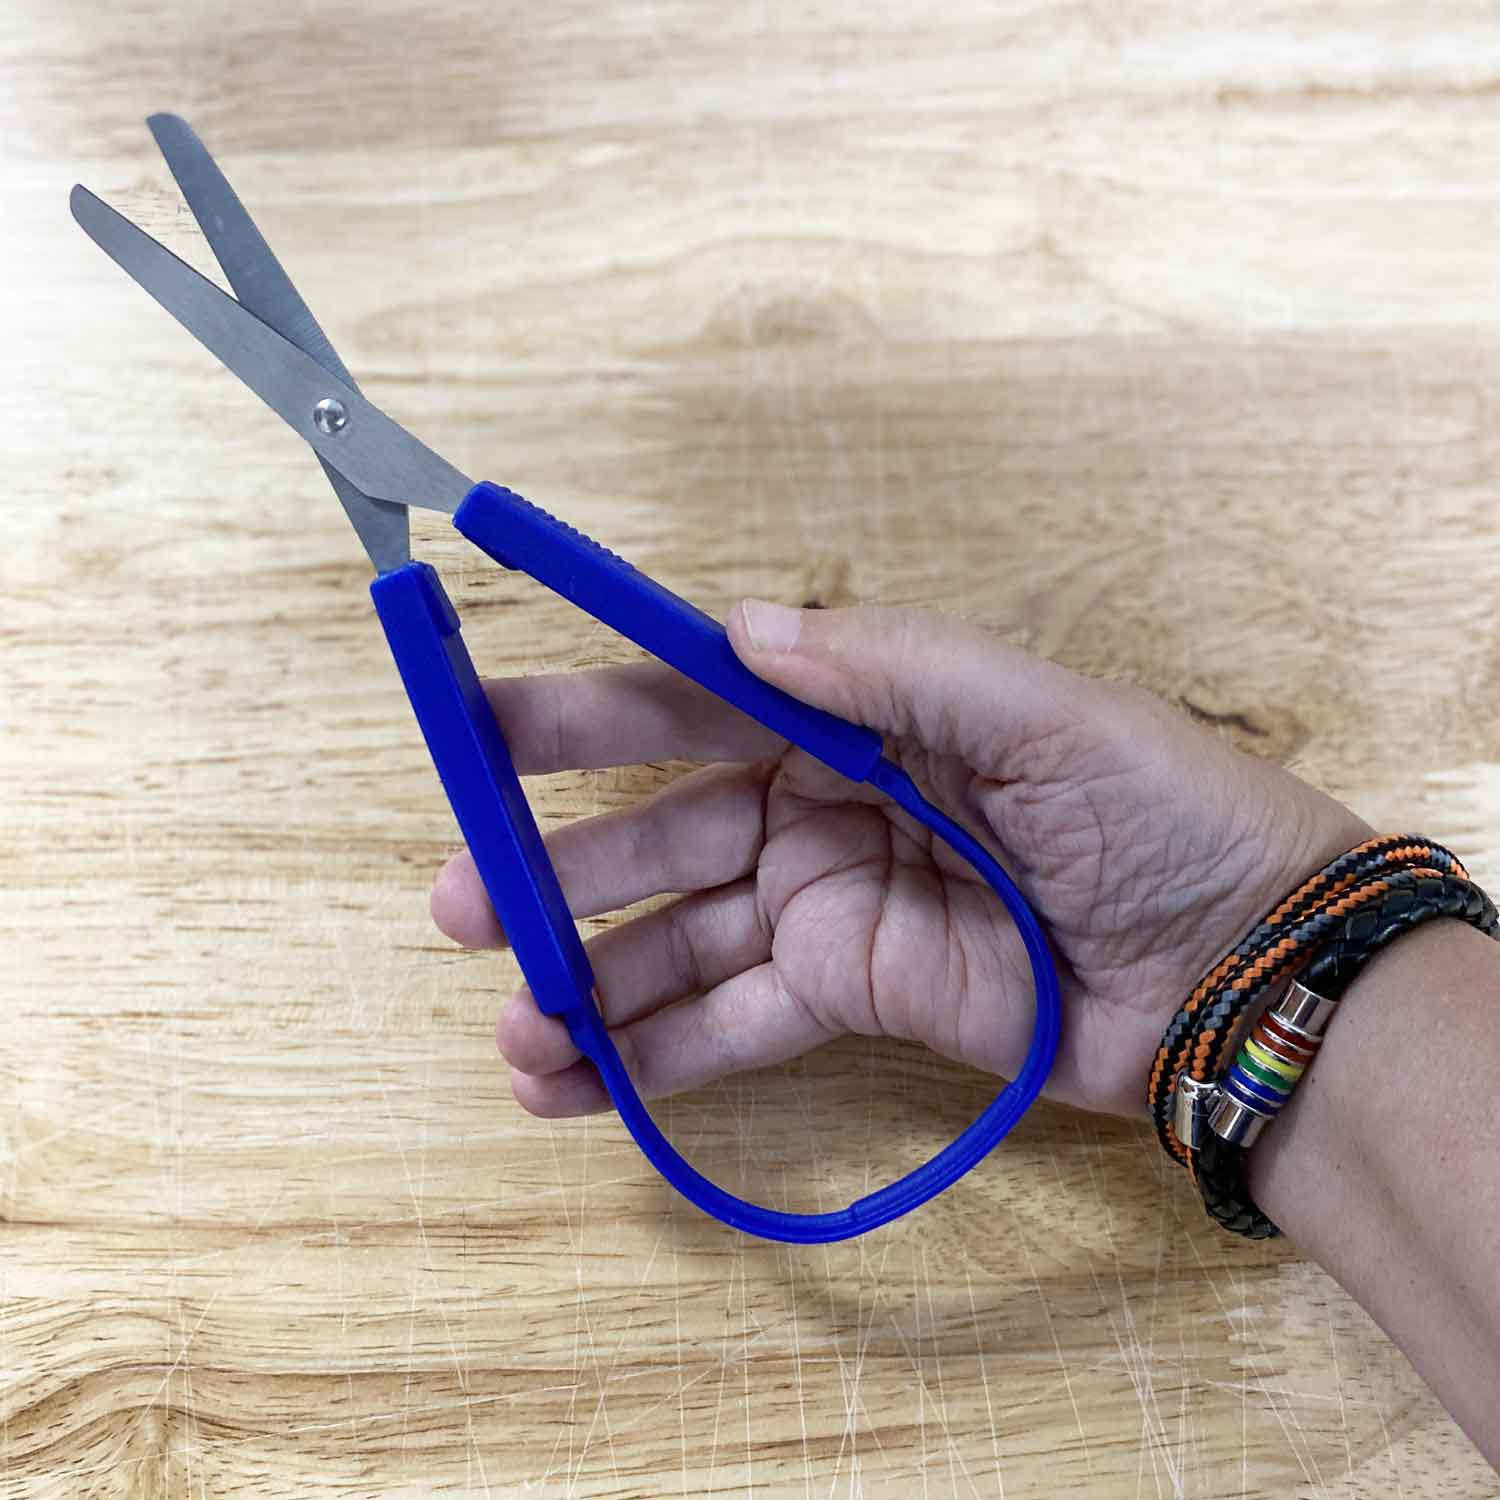 Loop Scissors For Kids Easy Grip Easy Opening Adapted Scissors For